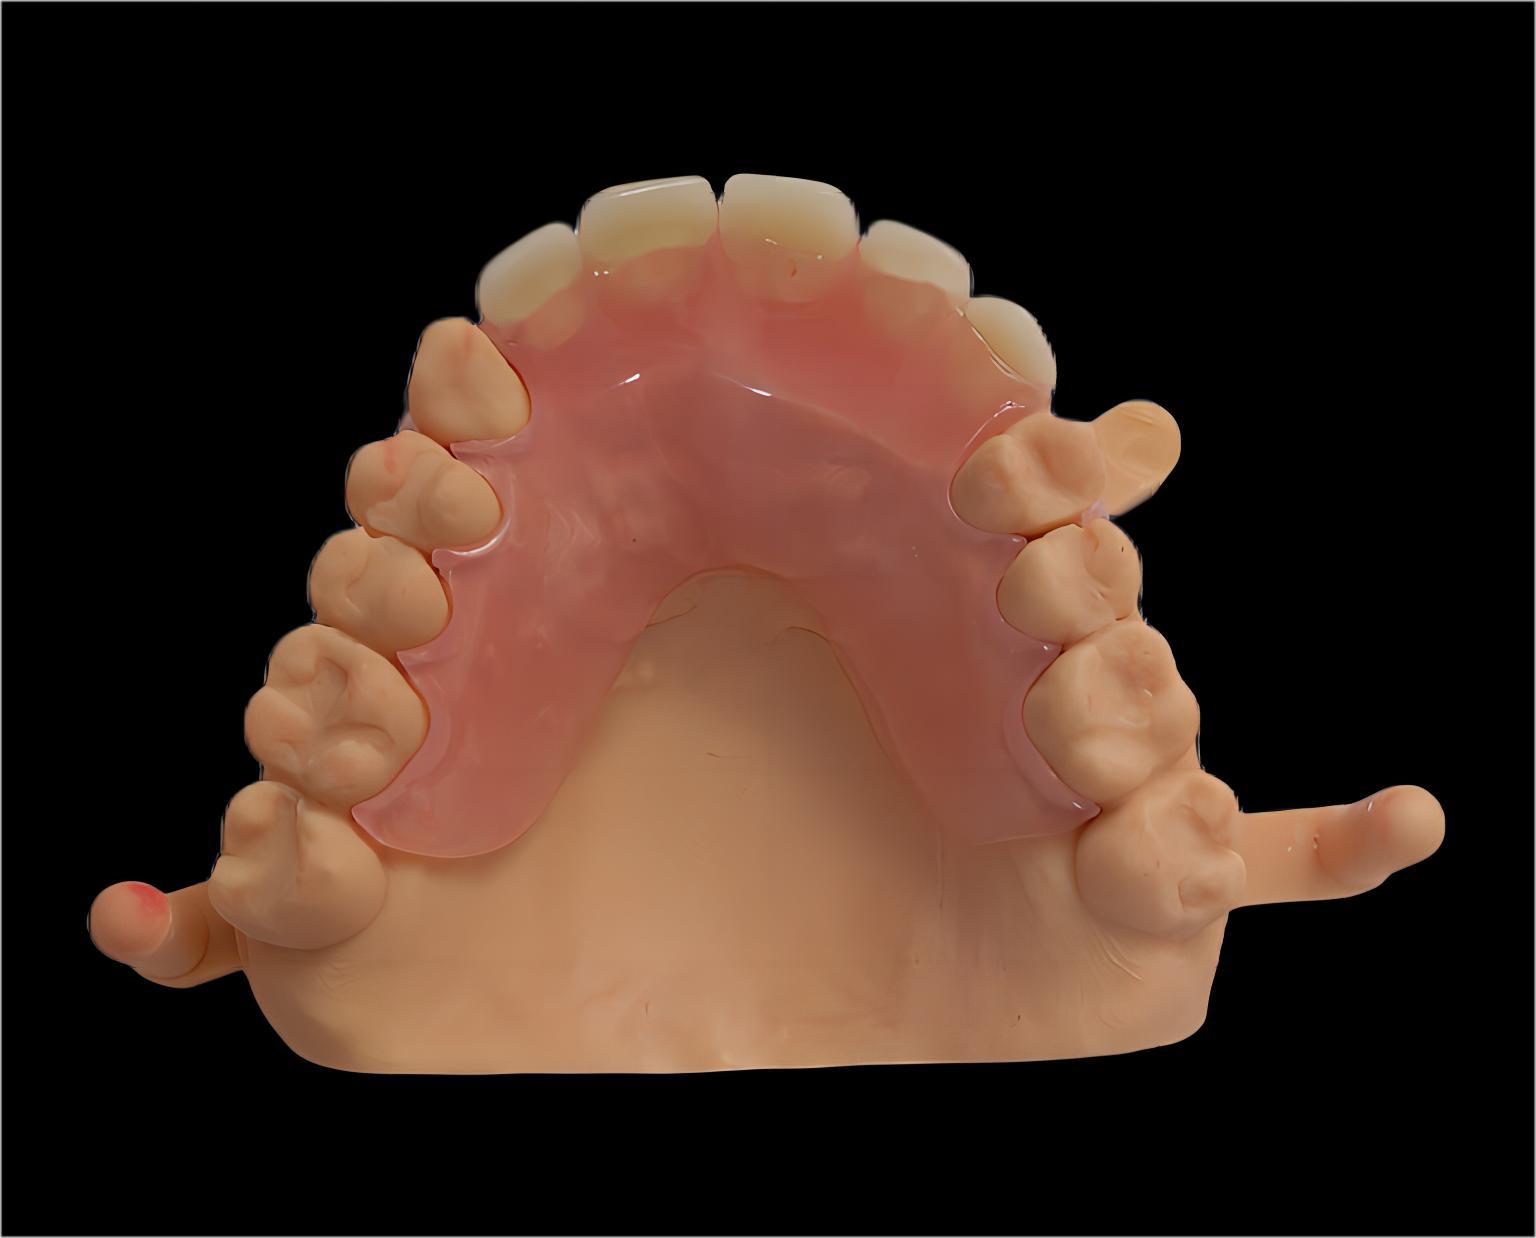 Vaplast/Flexible Denture